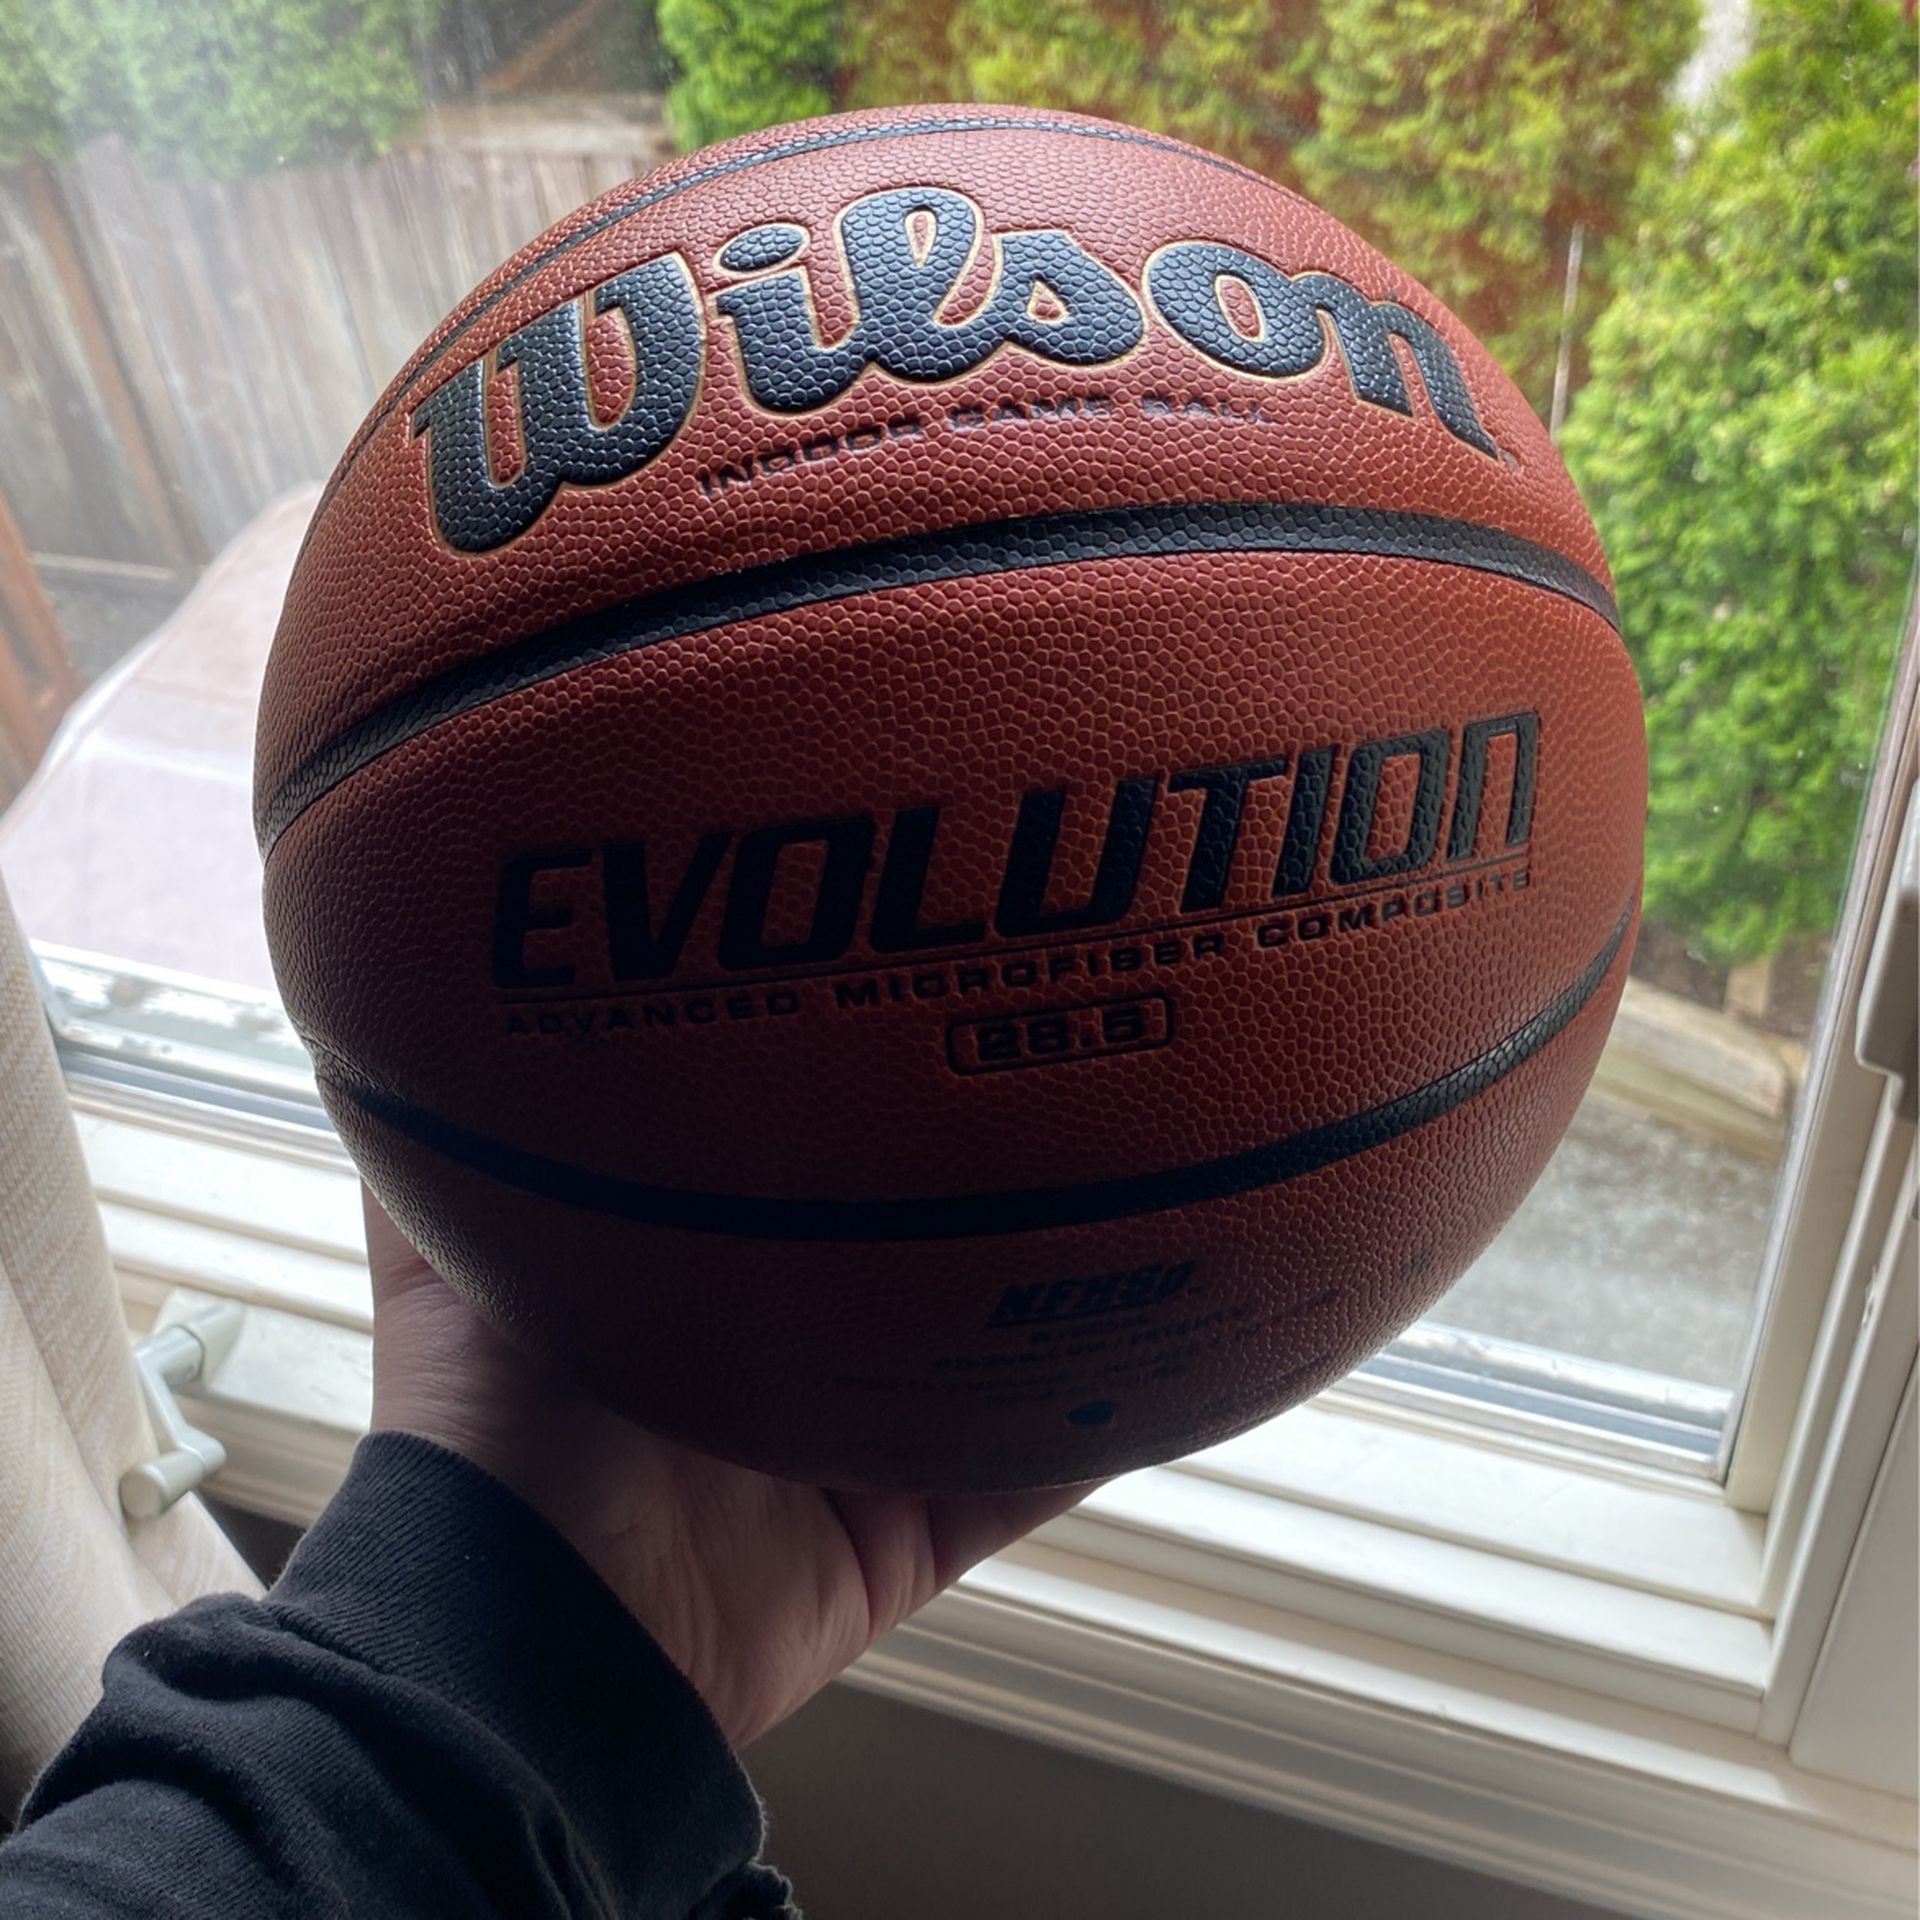 WILSON EVOLUTION BASKETBALL 